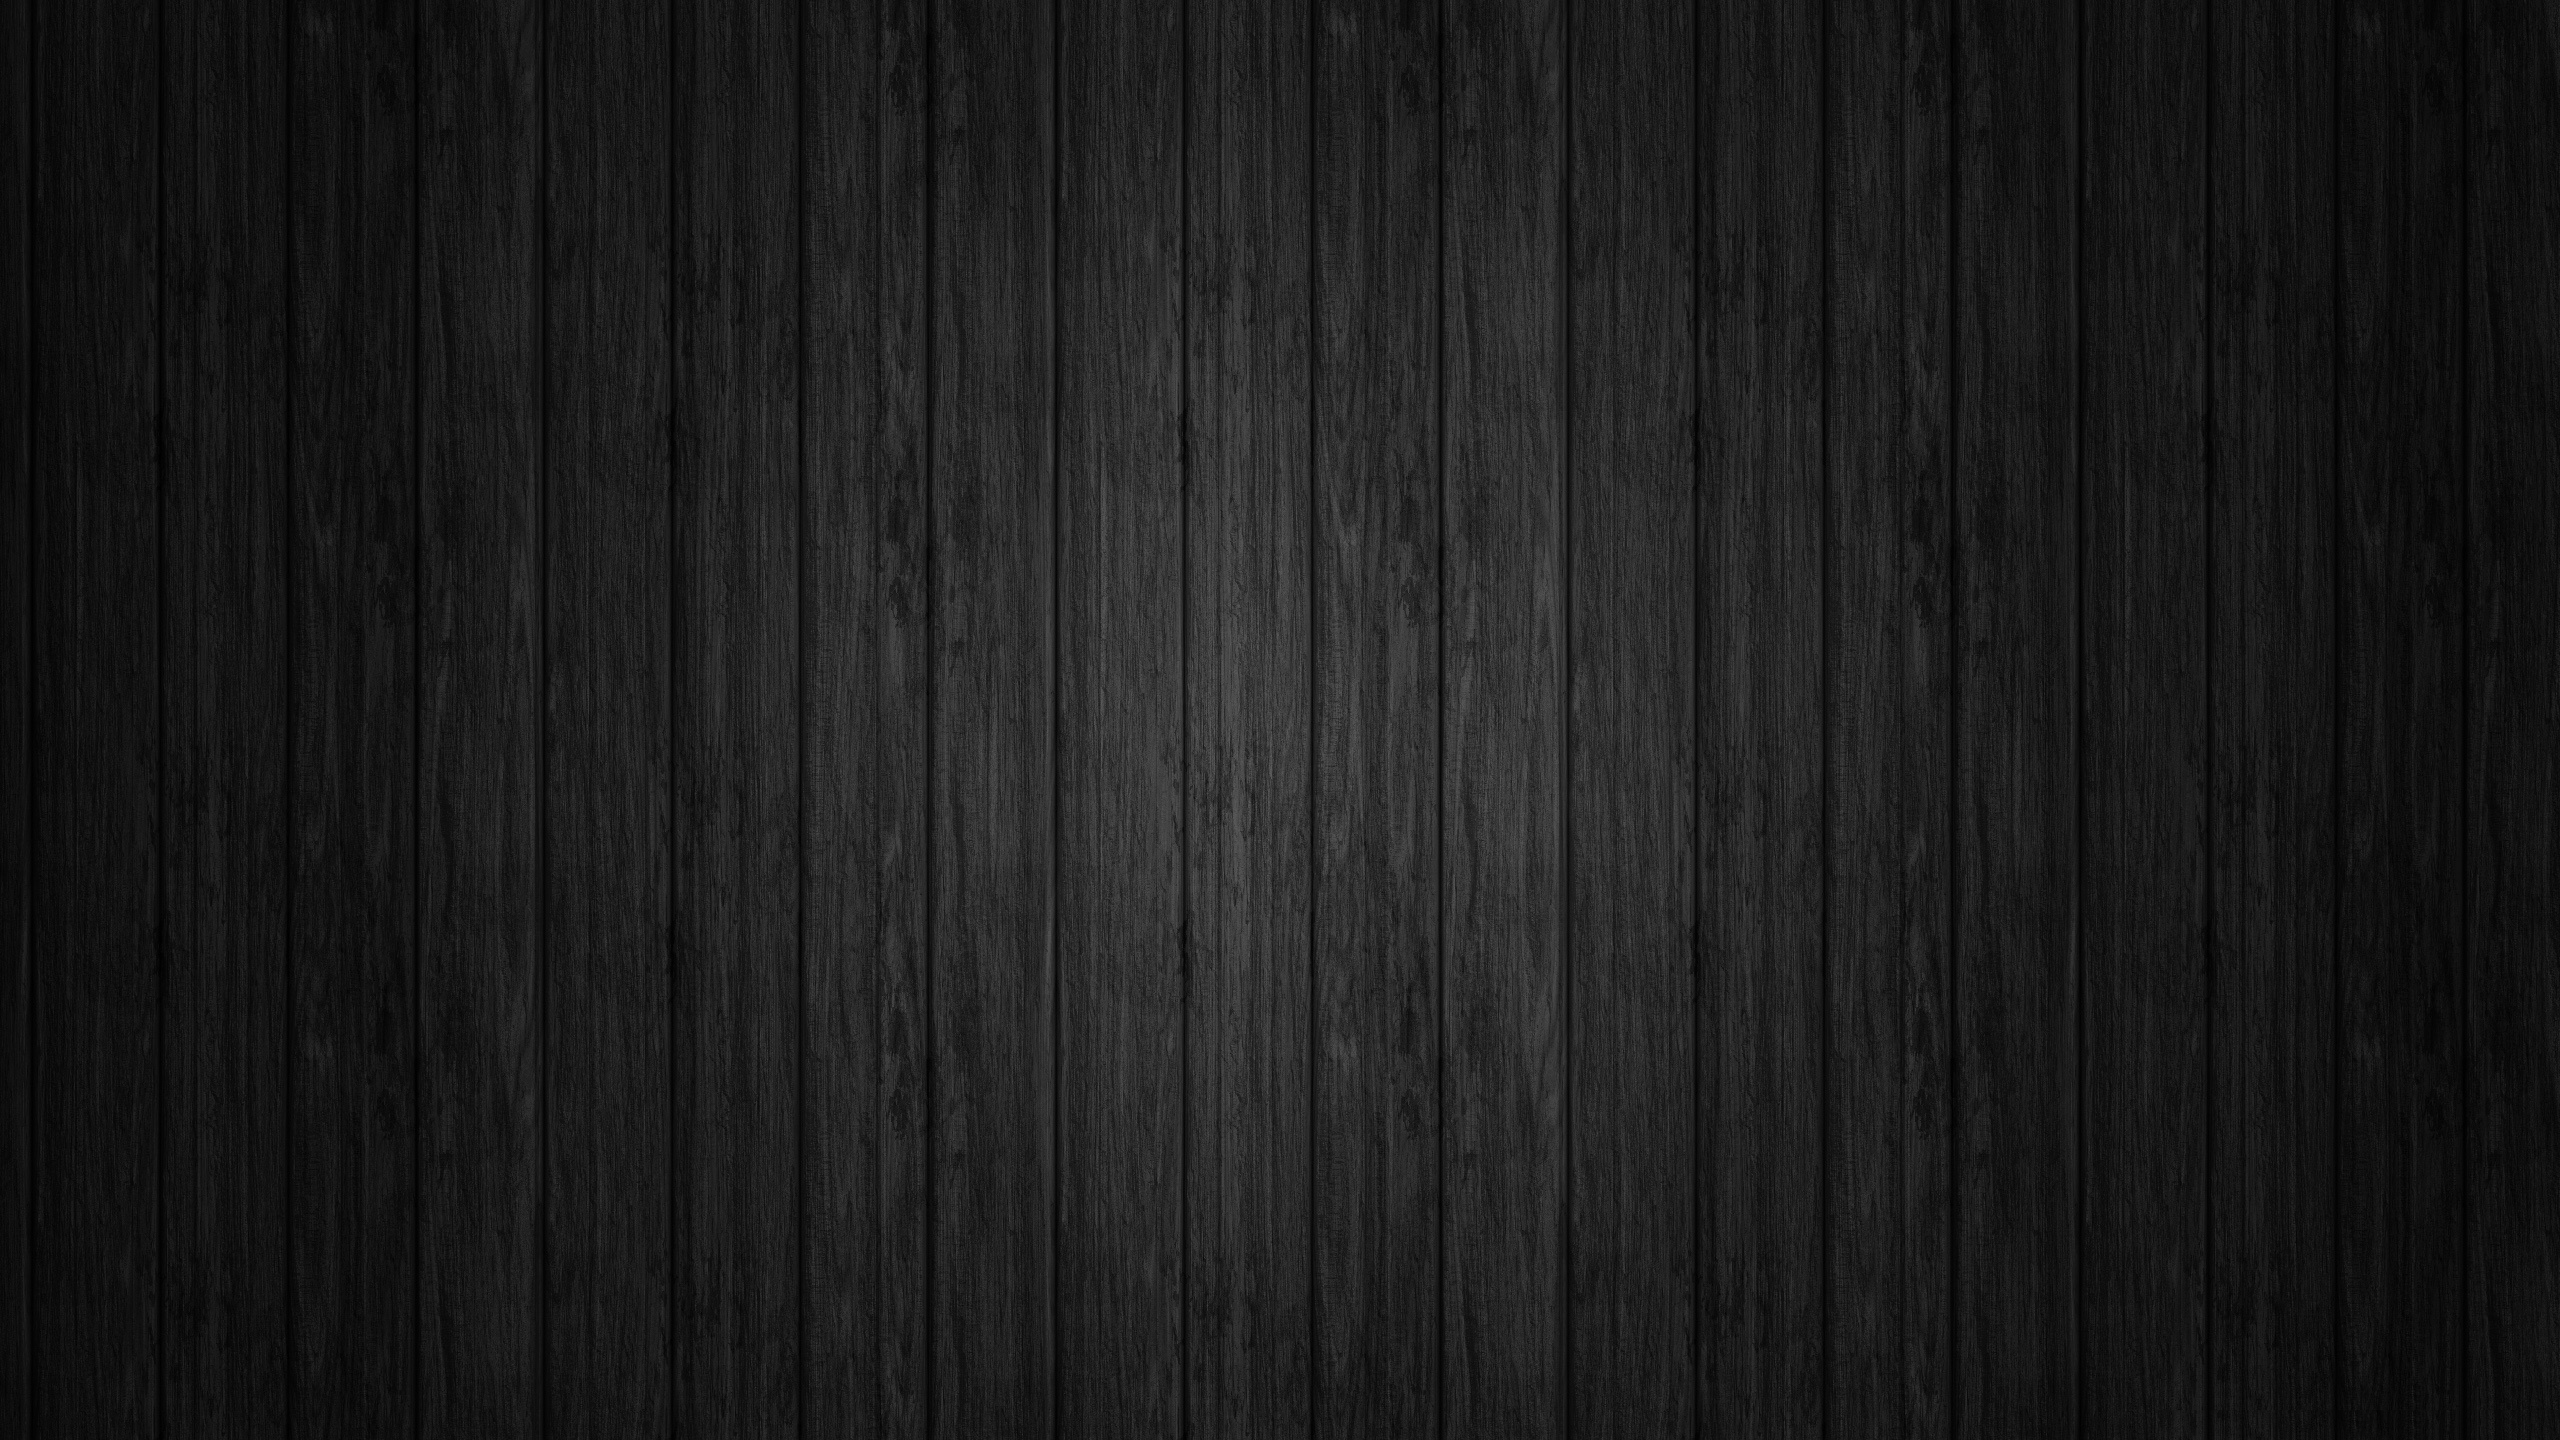 Static Black Background Wood